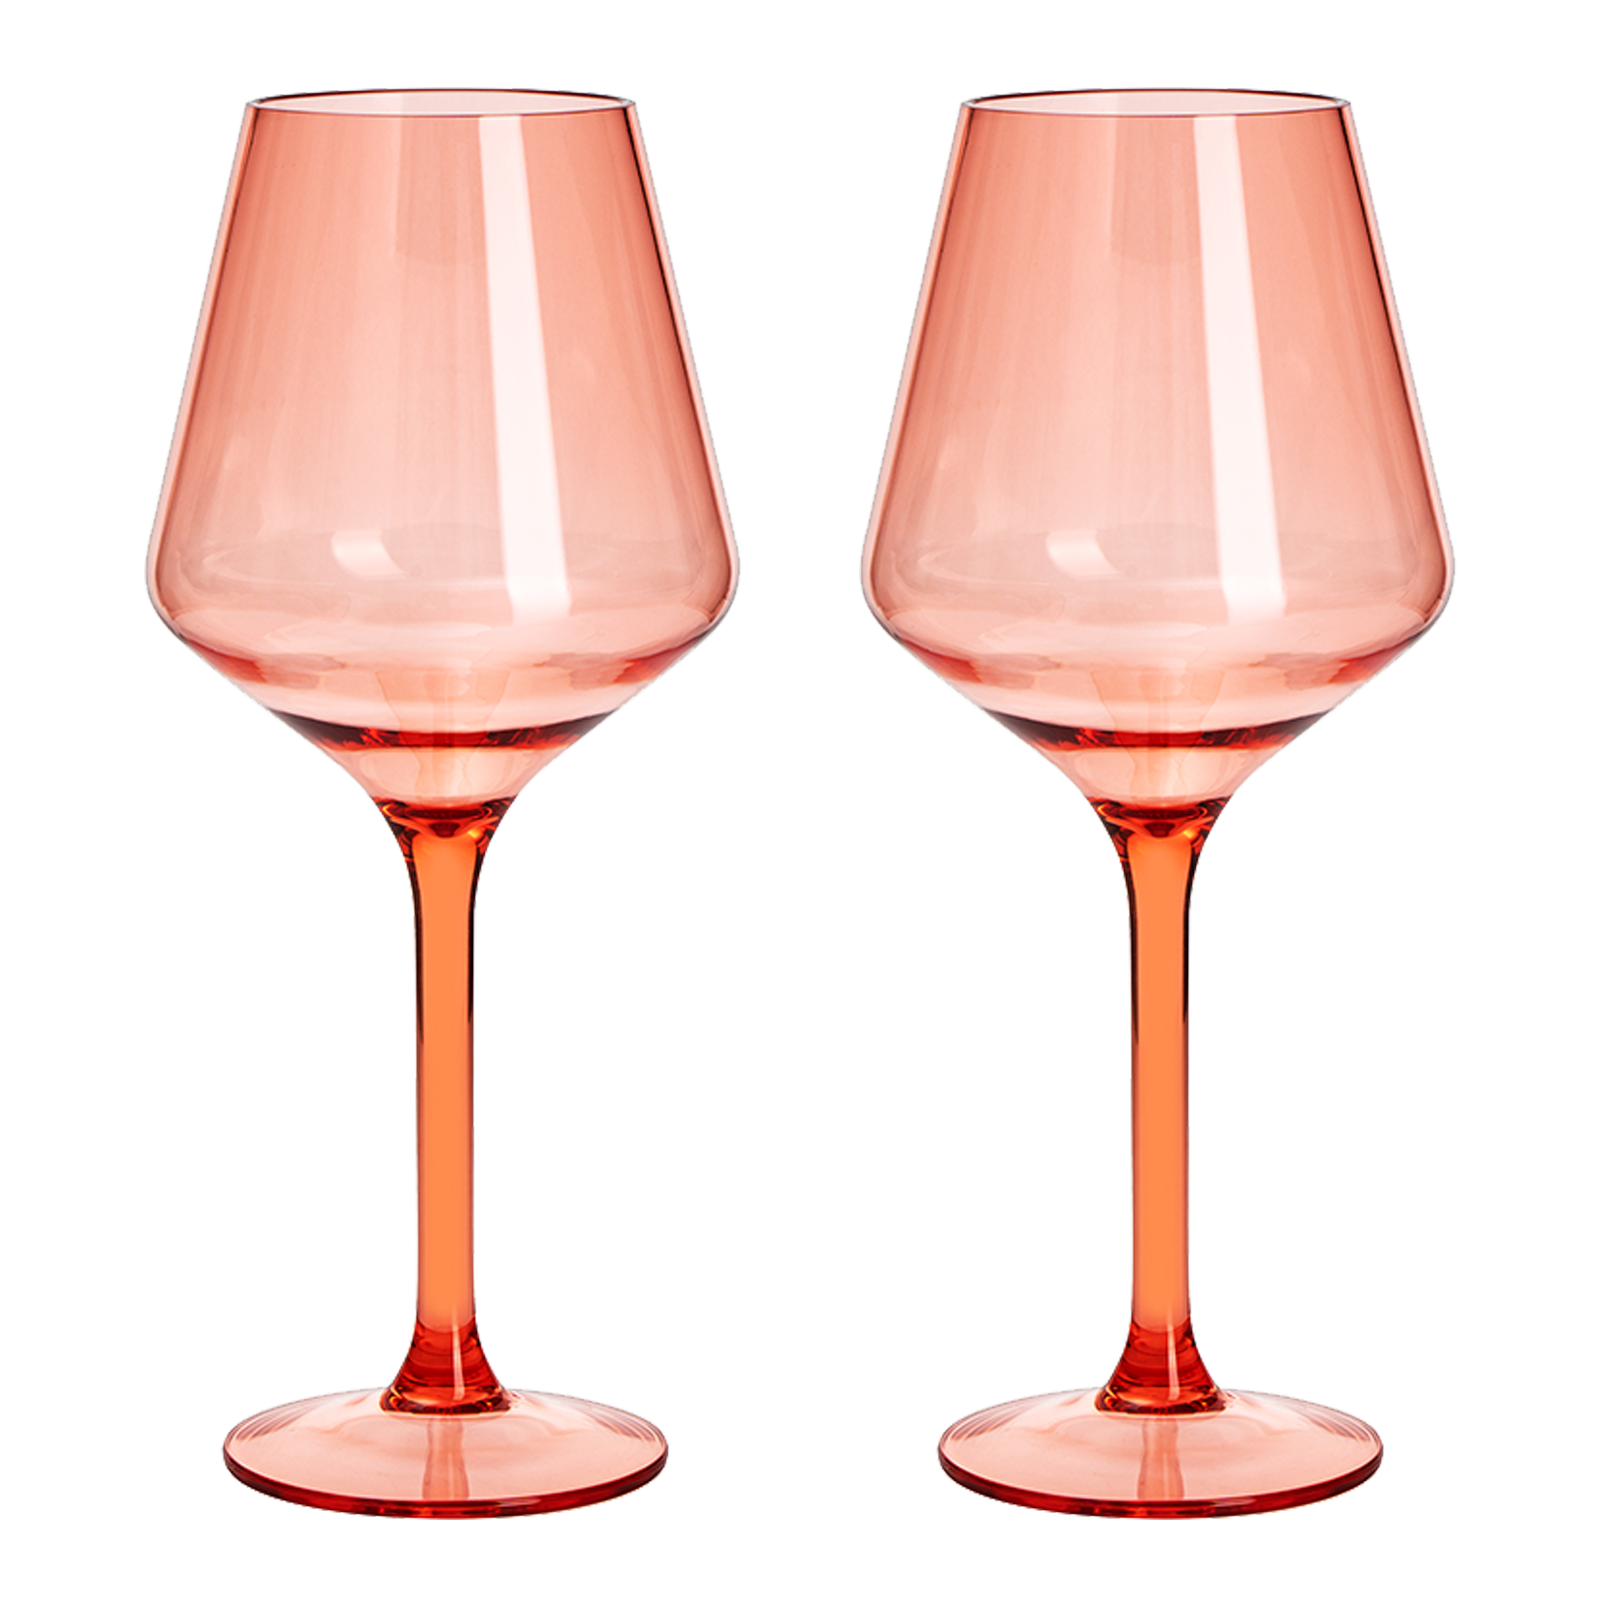 Floating Wine Glasses For The Pool - Set of 2 Shatterproof 21 Oz Plastic Wine  Glasses That